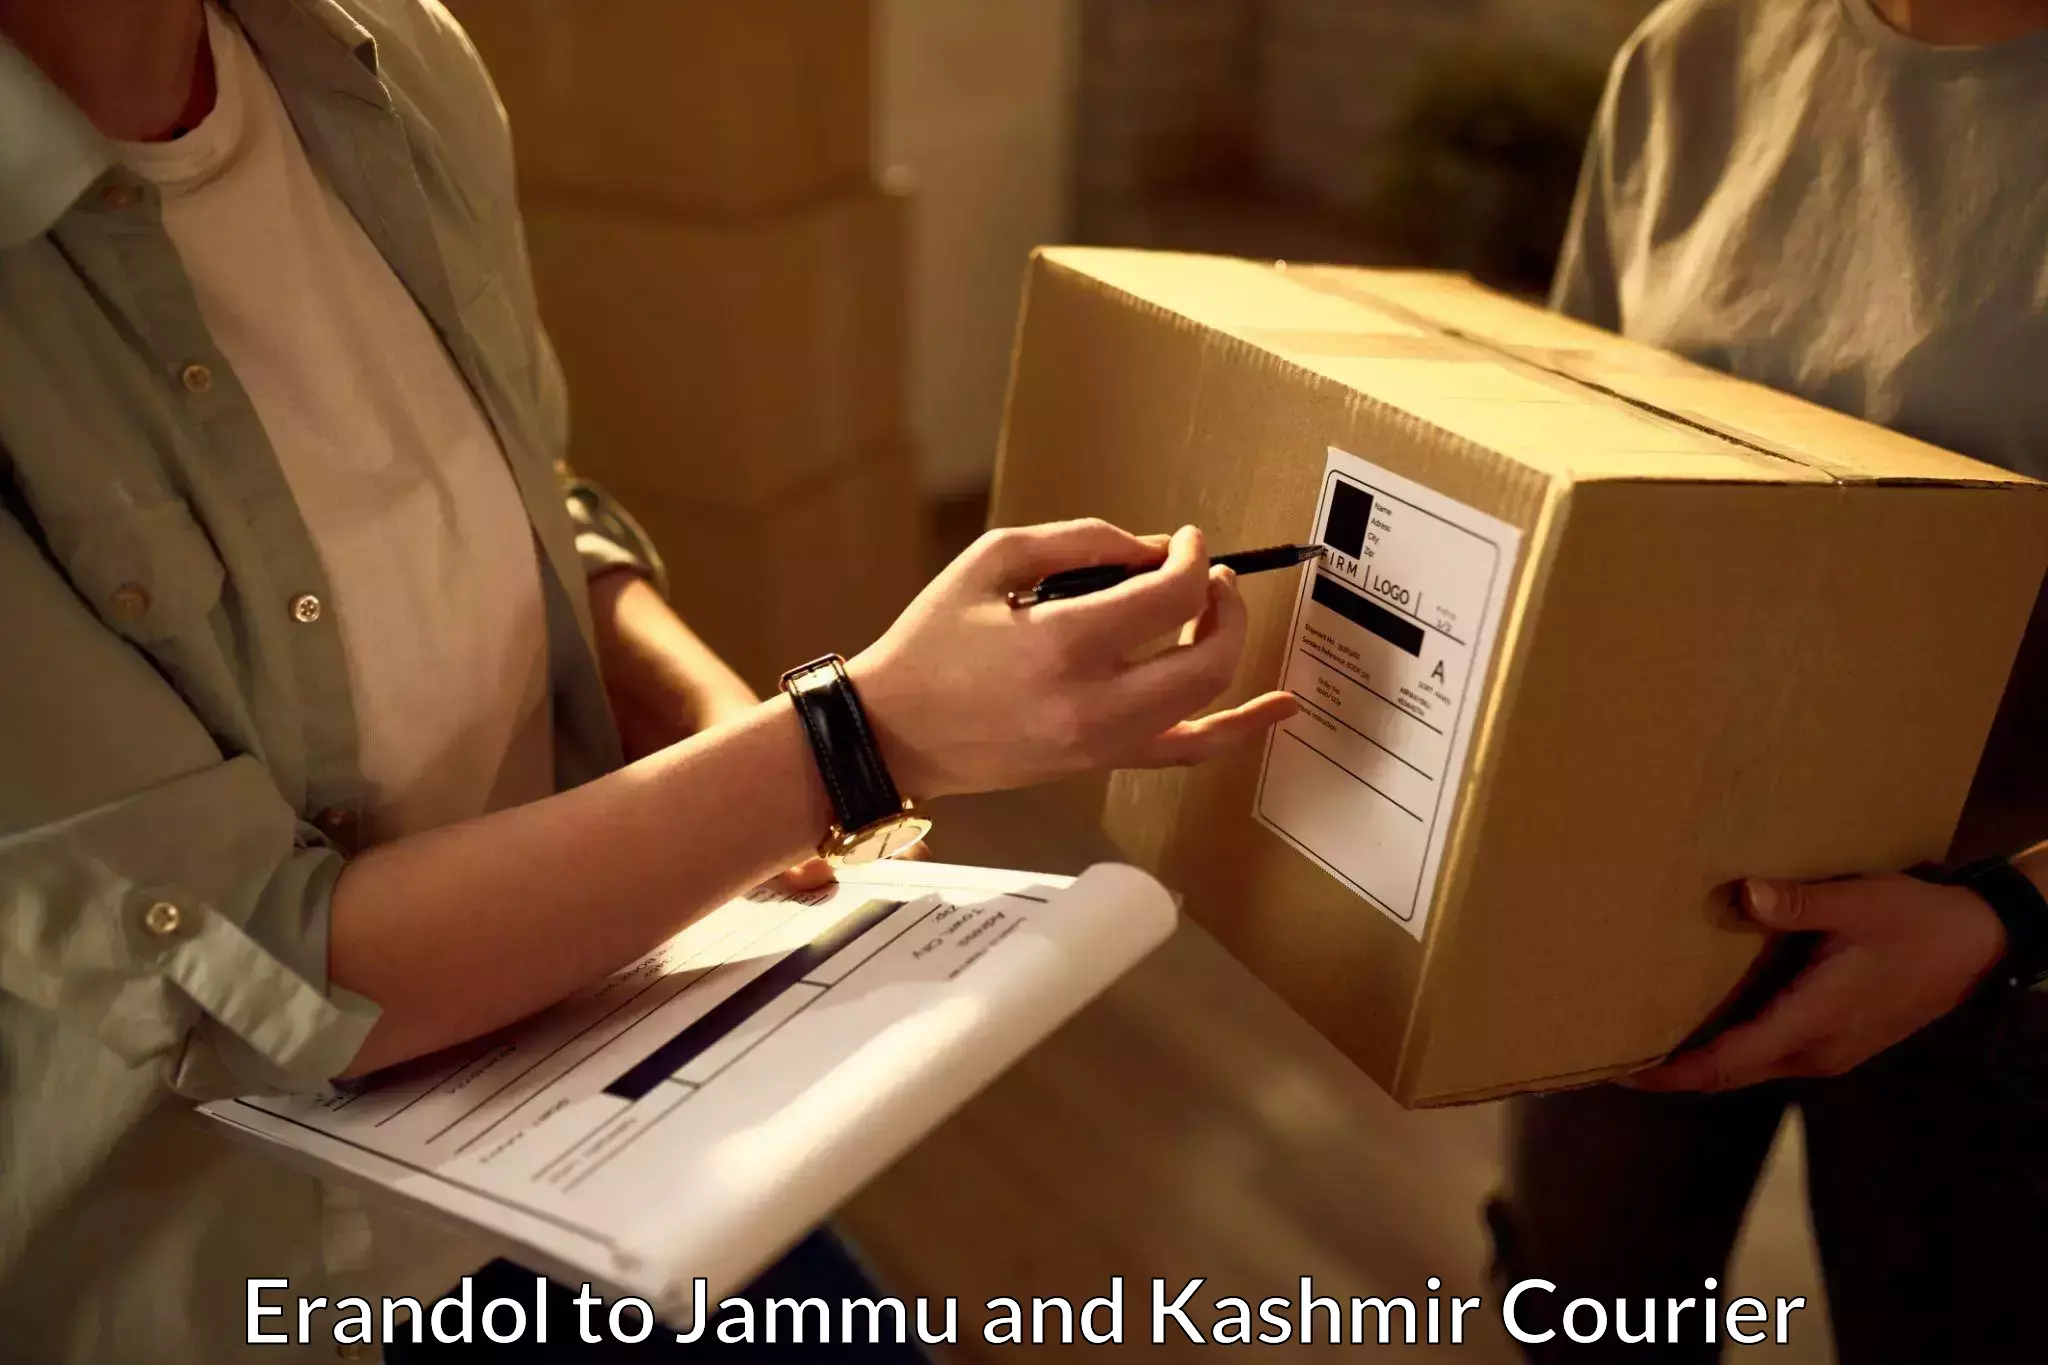 International parcel service Erandol to Jammu and Kashmir